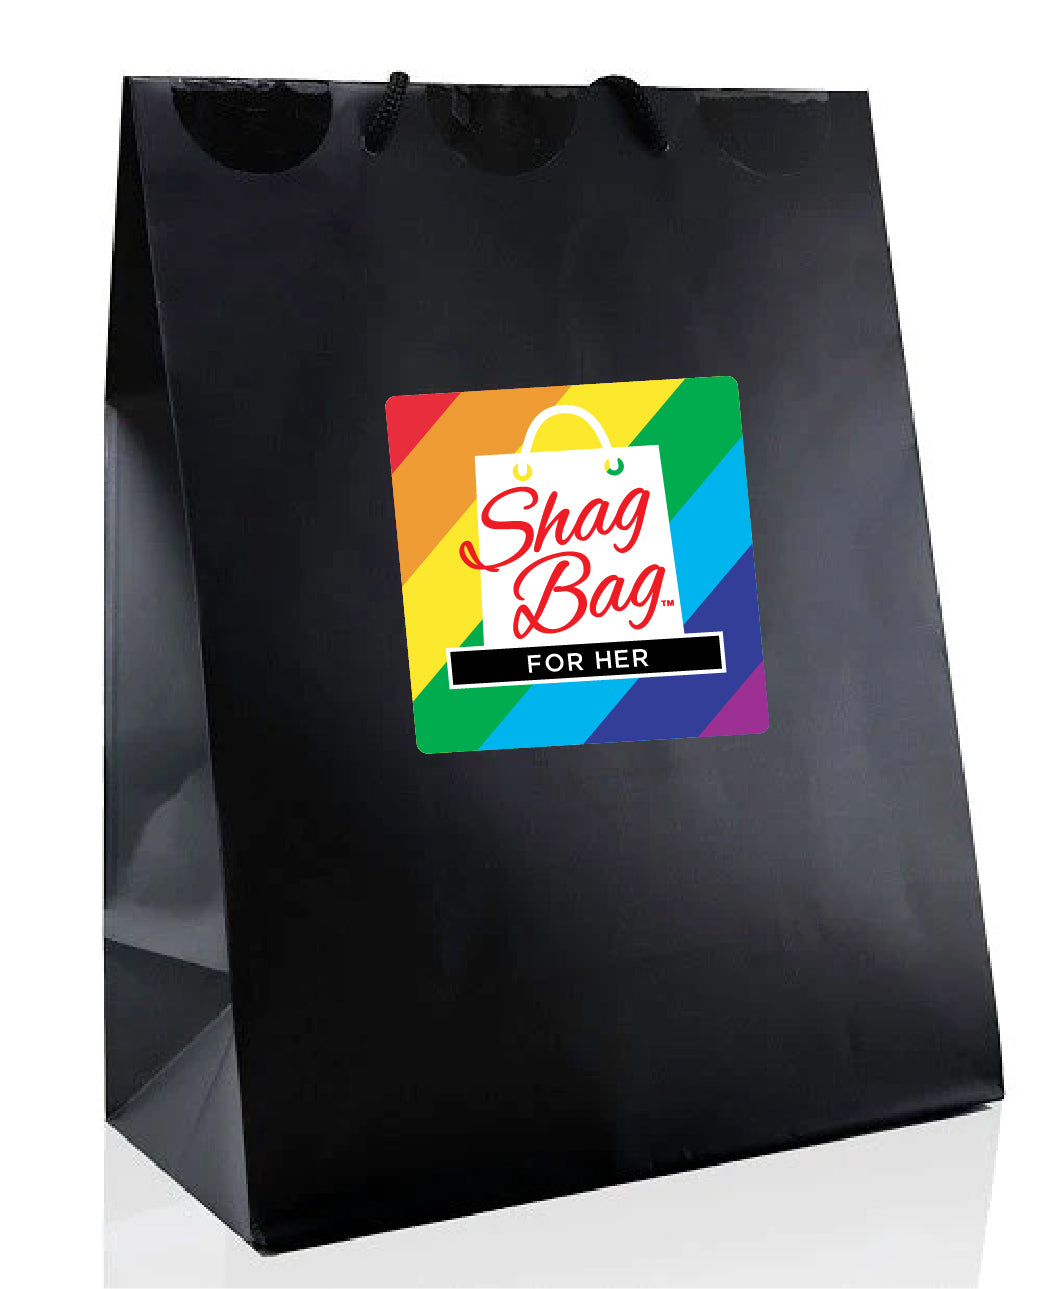 Shag Bag - For Her (Lesbian)